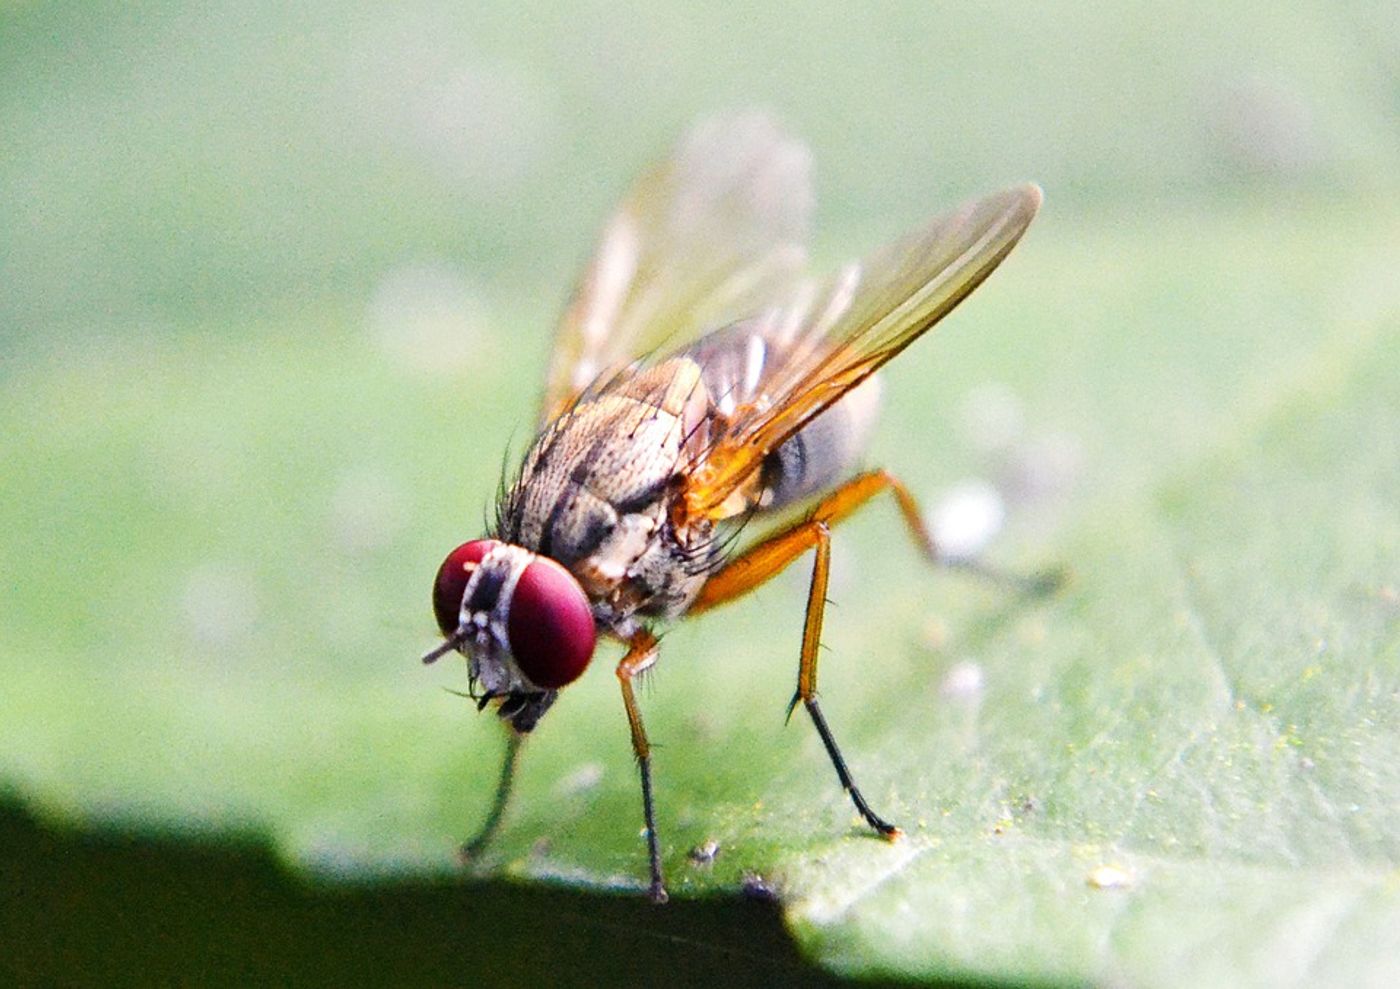 A fruit fly - Drosophila melanogaster / Image credit: Pixabay